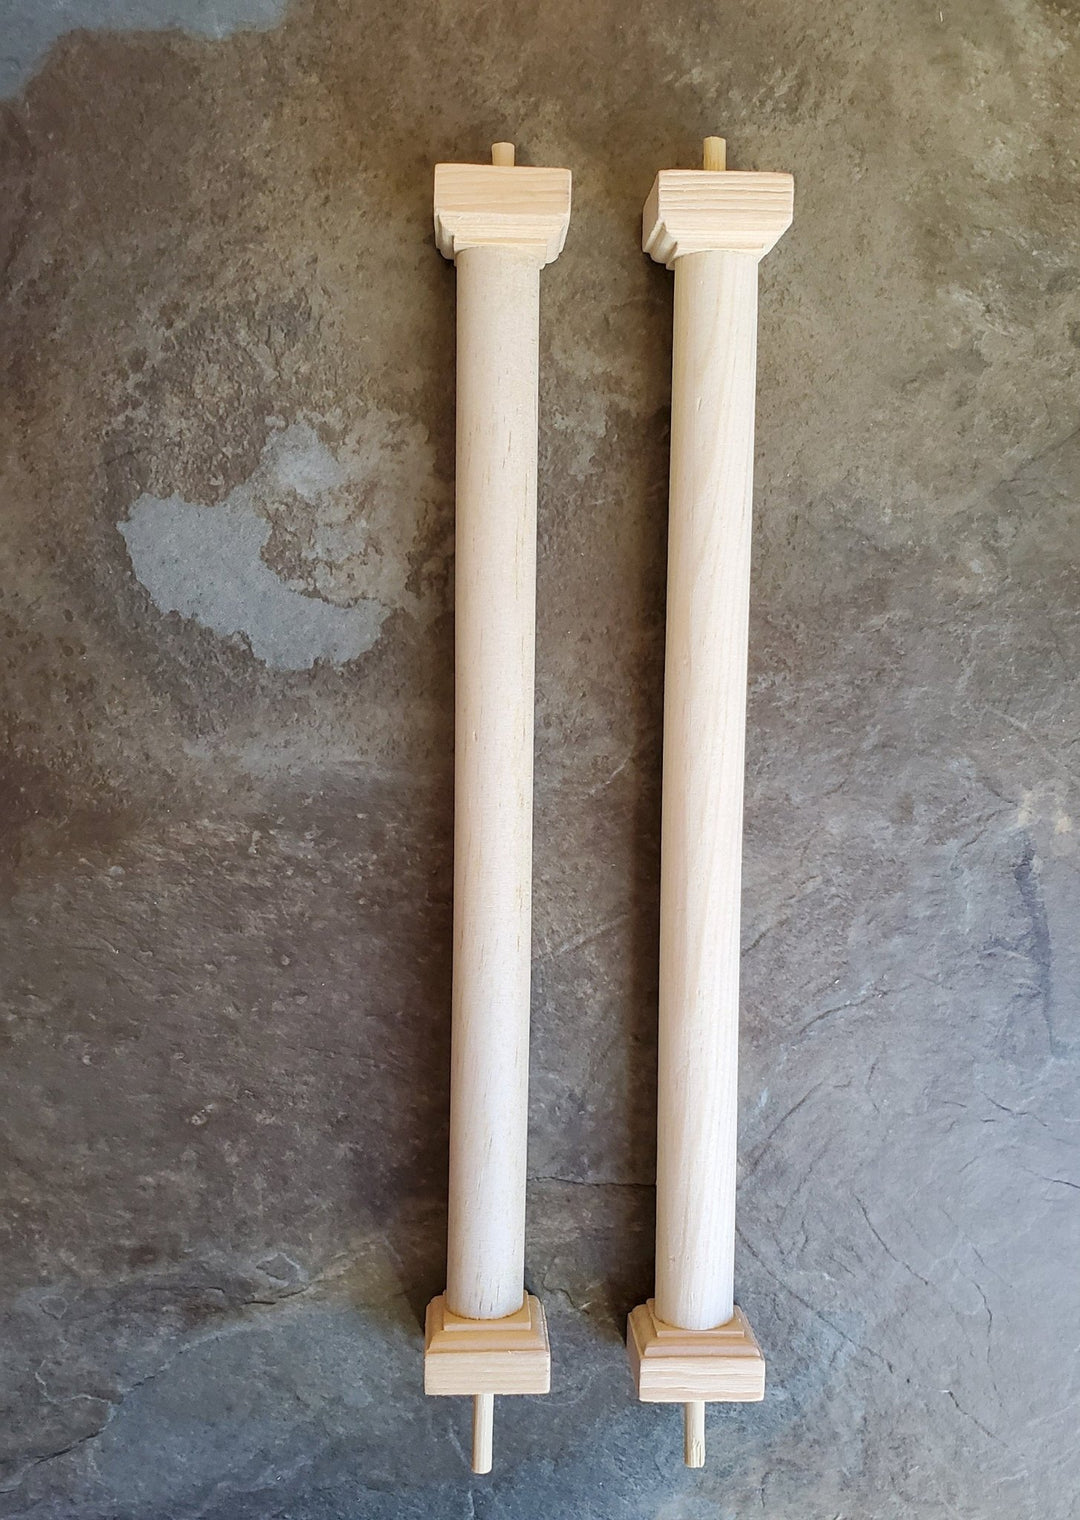 Dollhouse Miniature Round Columns Pillars 2 pieces 8 11/16" Tall 1:12 Scale - Miniature Crush